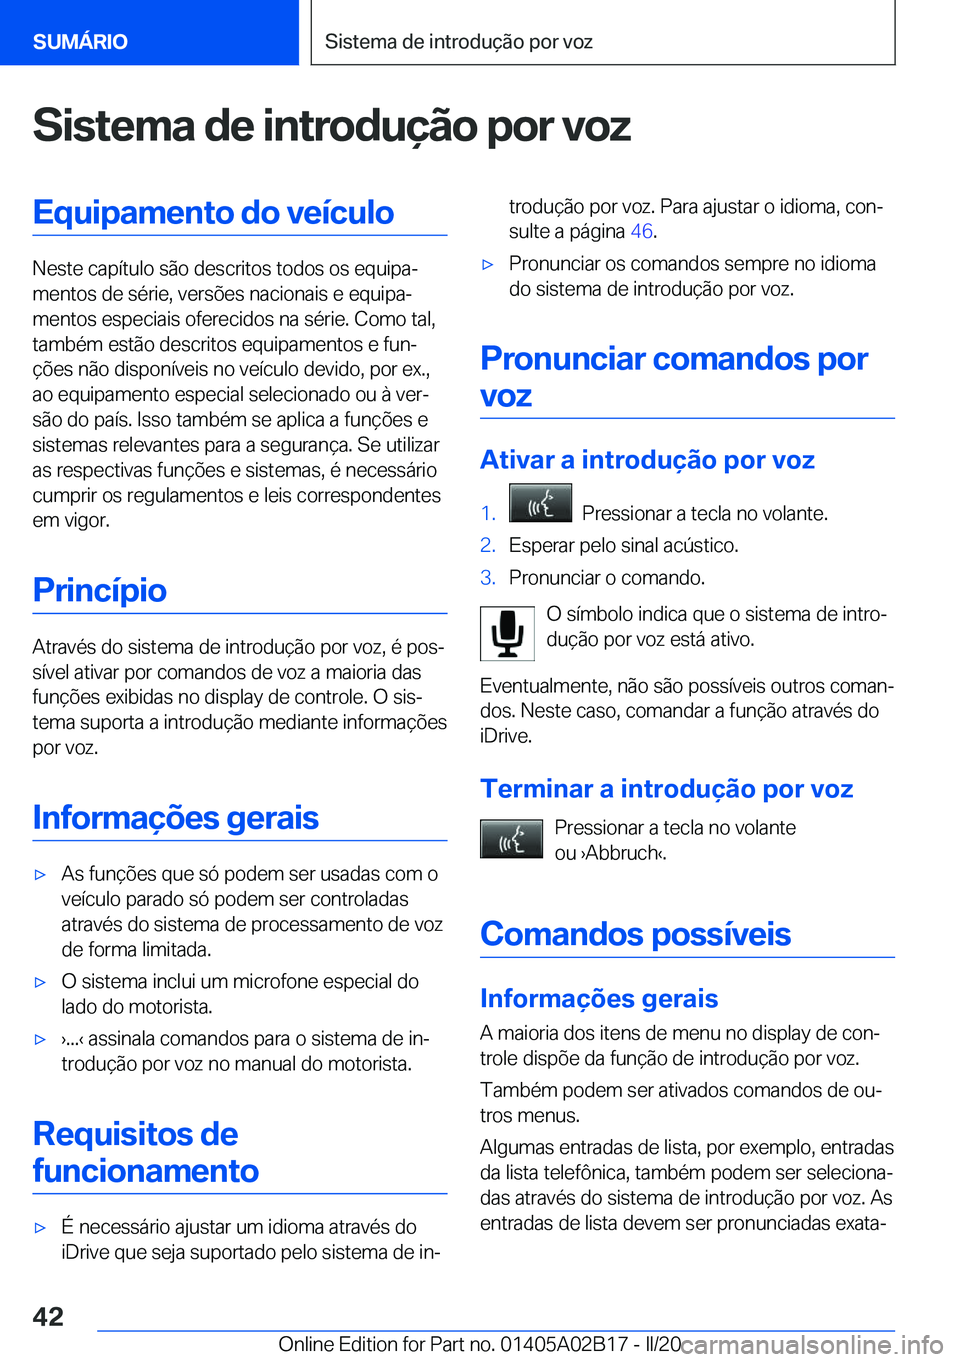 BMW X1 2020  Manual do condutor (in Portuguese) �S�i�s�t�e�m�a��d�e��i�n�t�r�o�d�u�